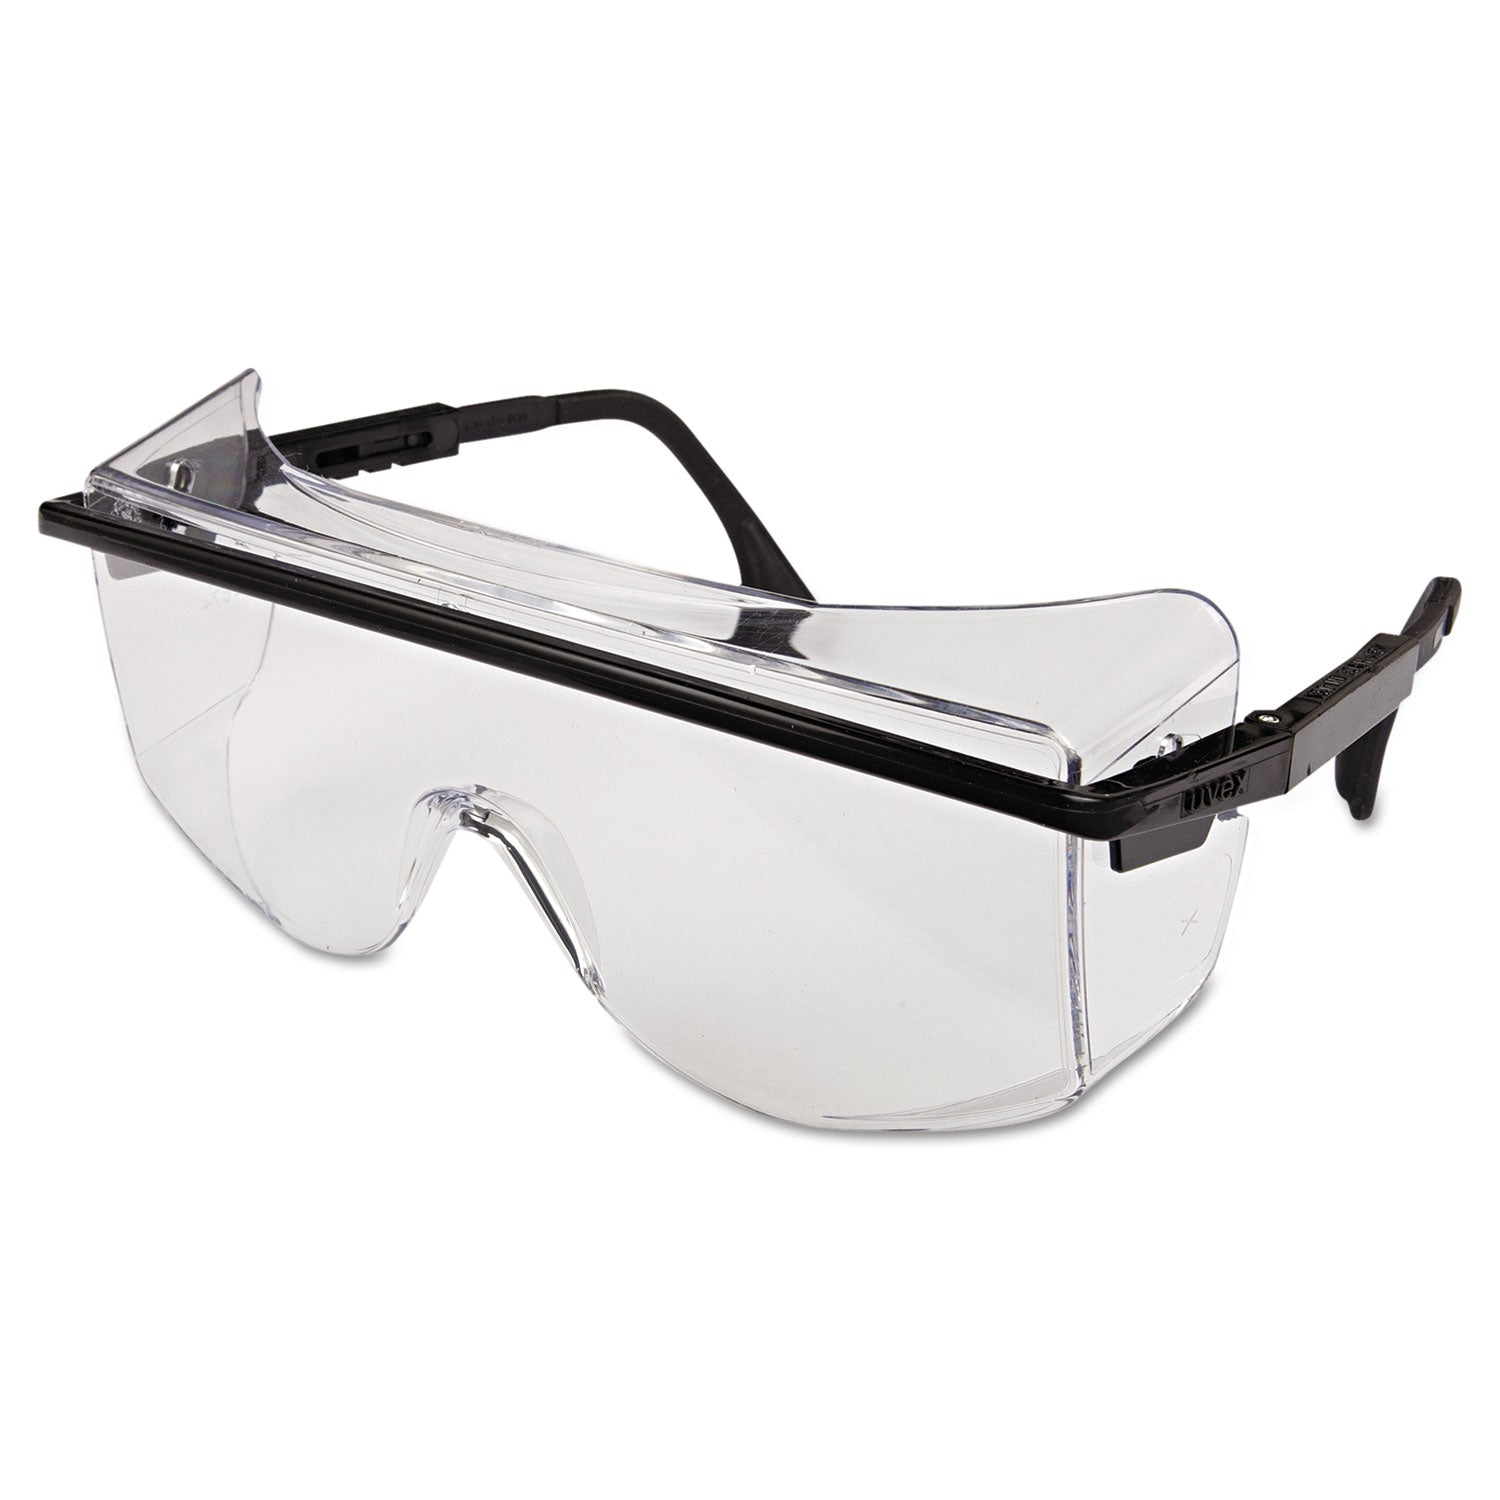 astro-otg-3001-safety-spectacles-black-frame_uvxs2500c - 1